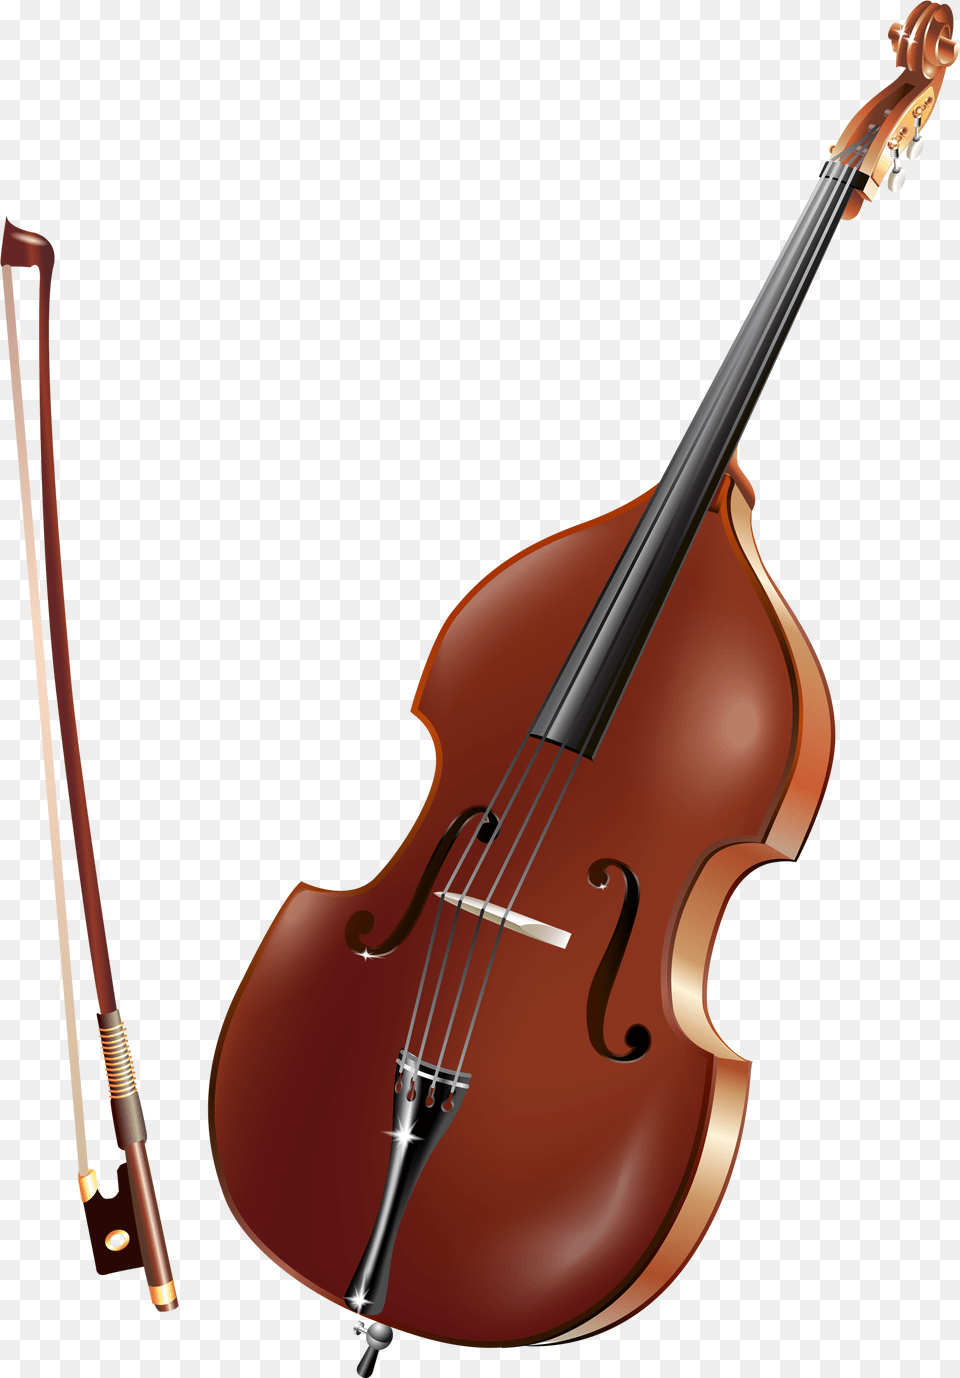 Musical Instrument Violin Cello Clipart For Musical Instruments, Musical Instrument Png Image